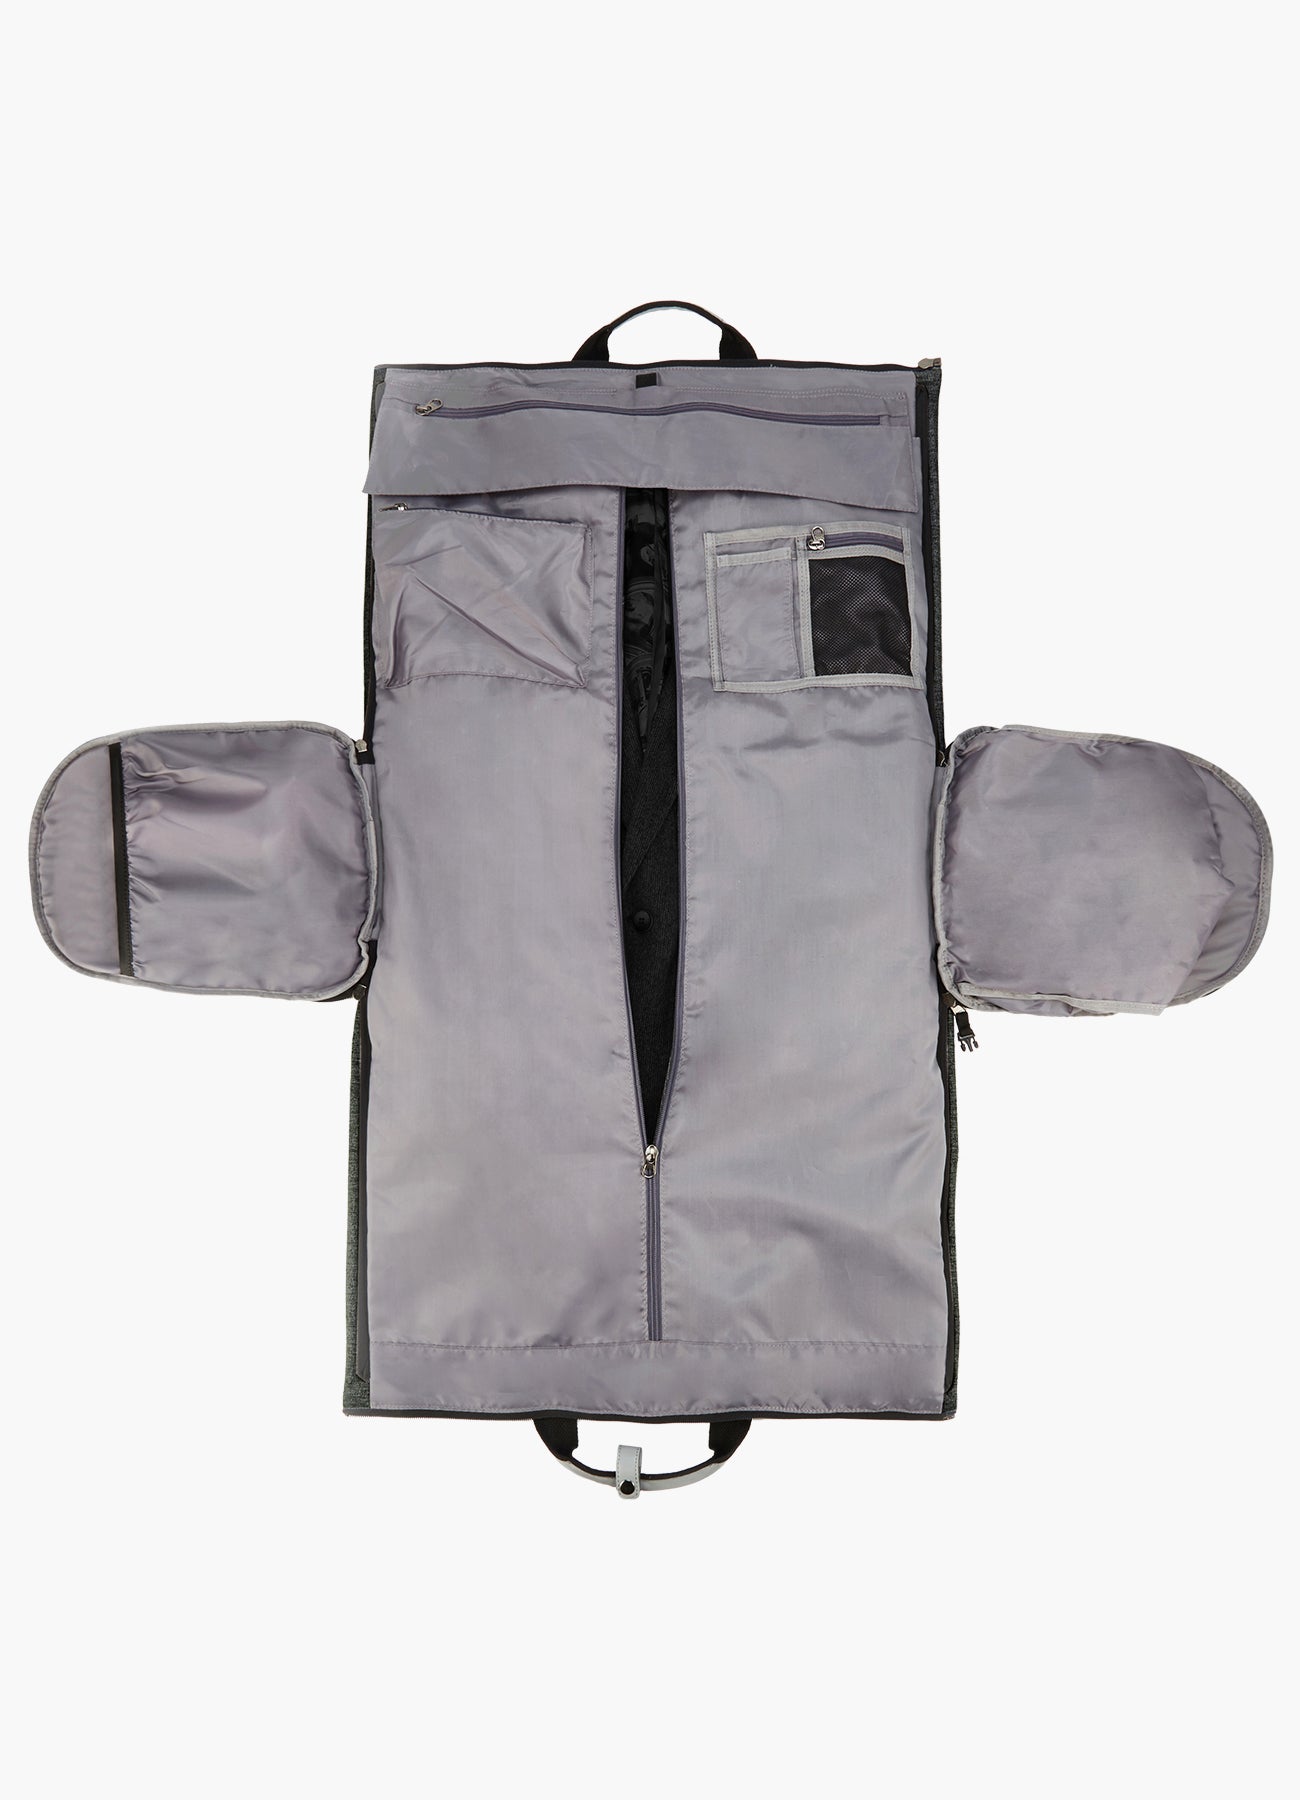 Convertible Garment Bag with Shoulder Strap, Modoker Carry on Garment  Duffel Bag for Men Women - Duffels & Gym Bags - Chesapeake, Virginia, Facebook Marketplace